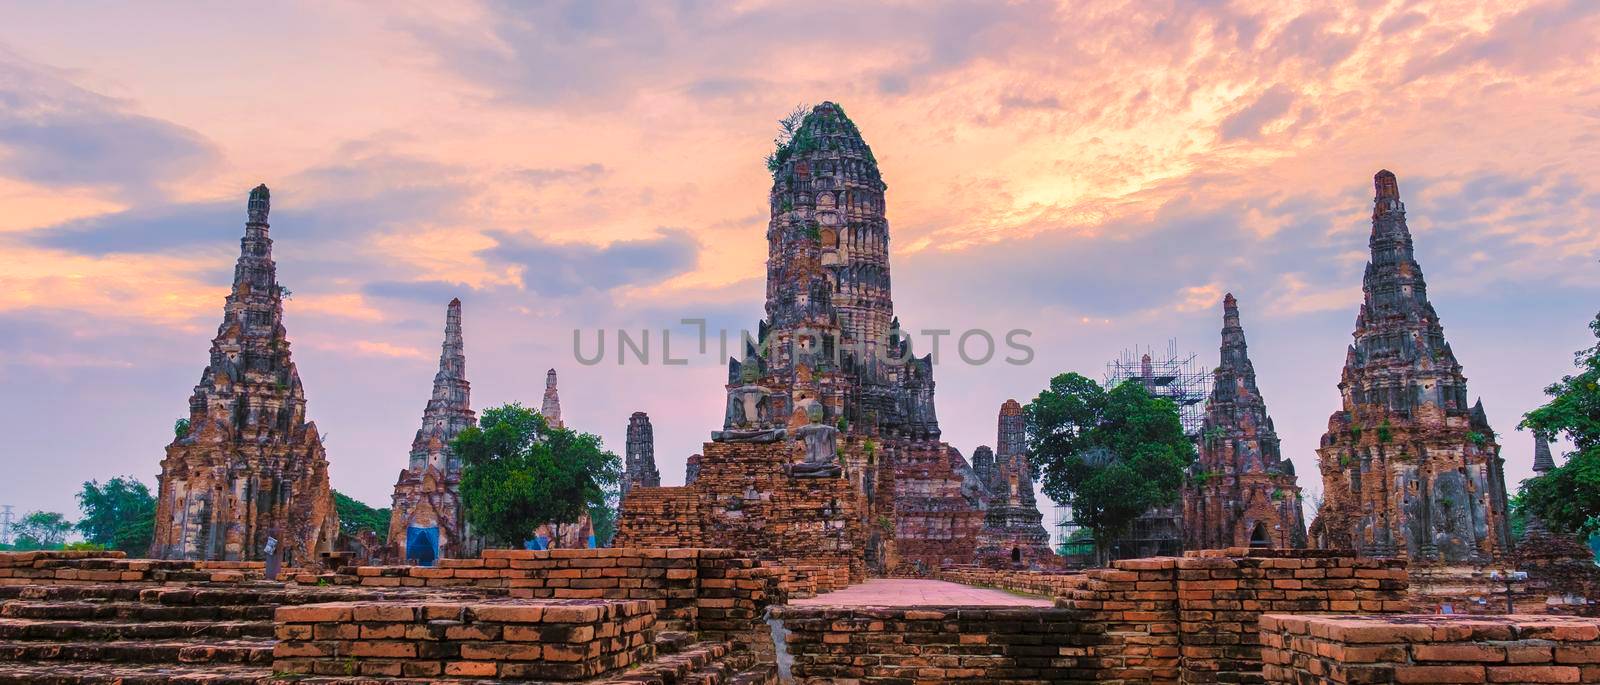 Ayutthaya, Thailand at Wat Chaiwatthanaram during sunset by fokkebok